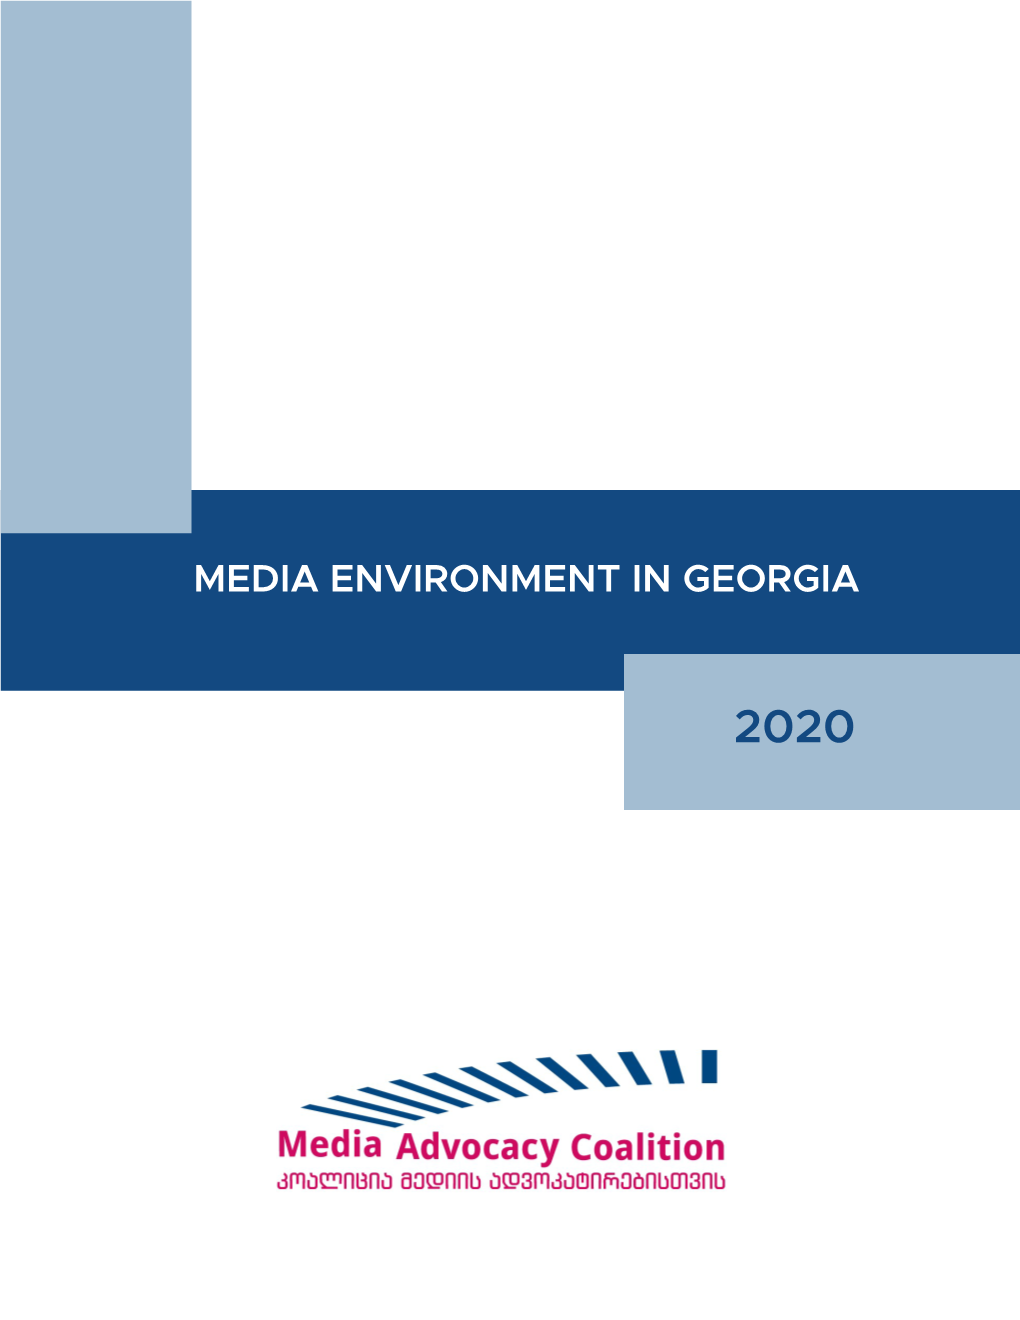 Media Environment in Georgia